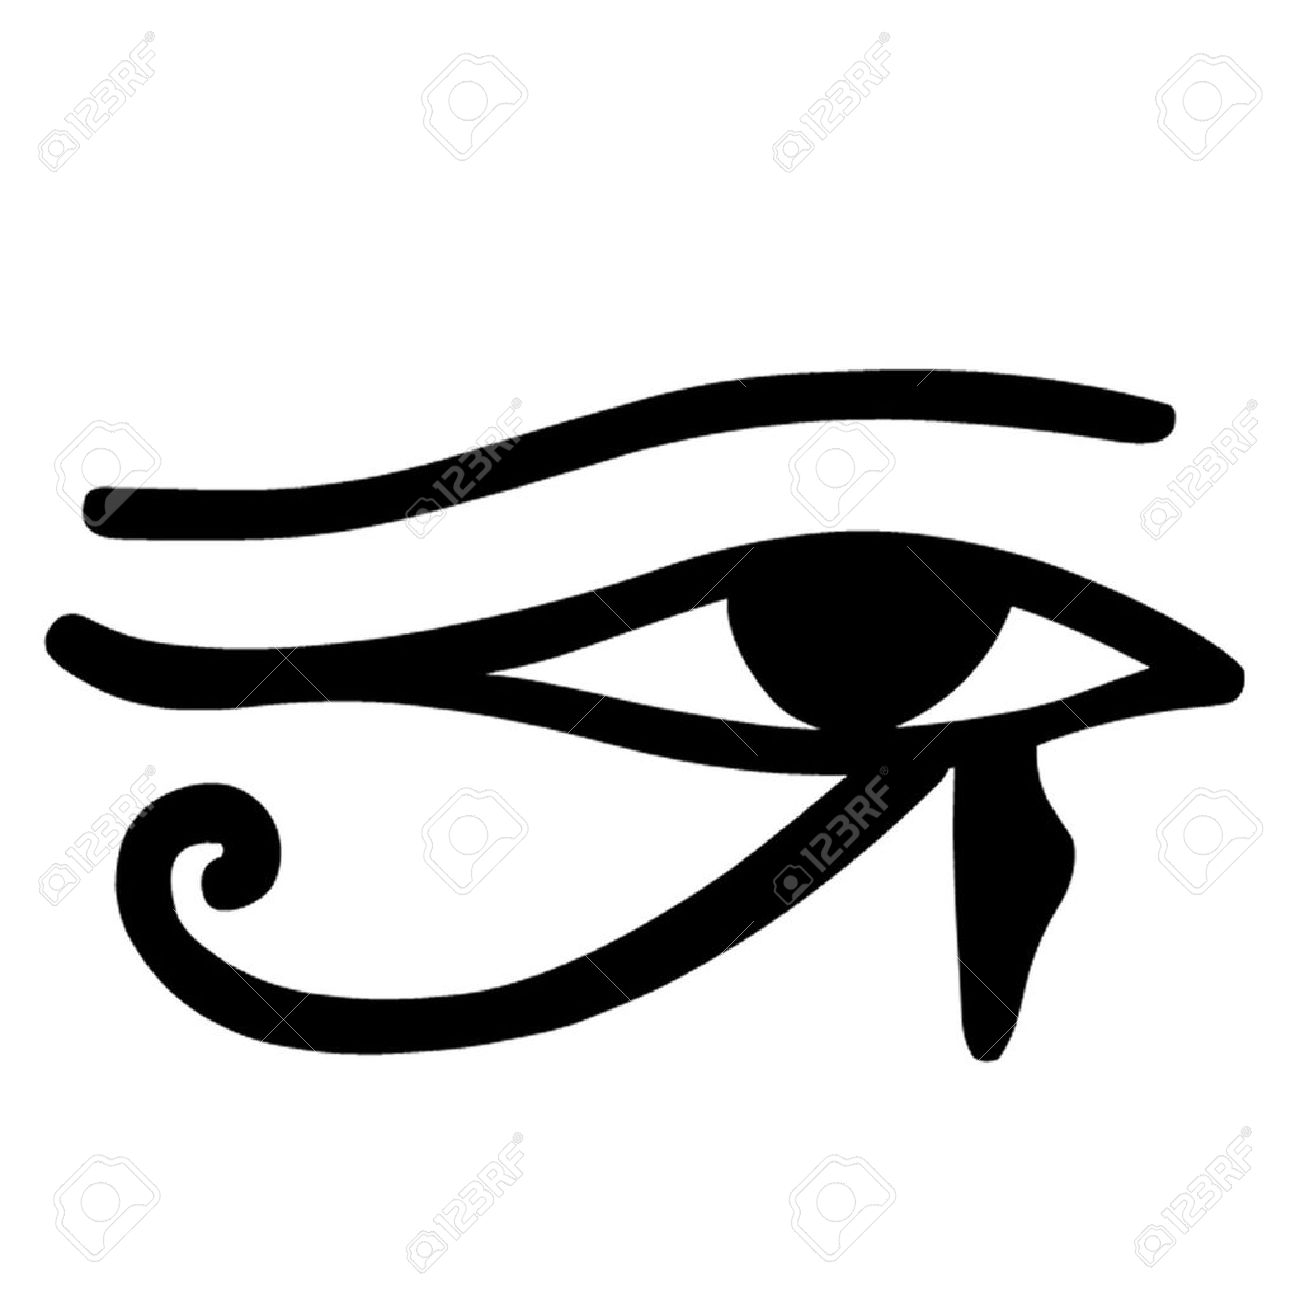 Eye Of Horus clipart #5, Download drawings